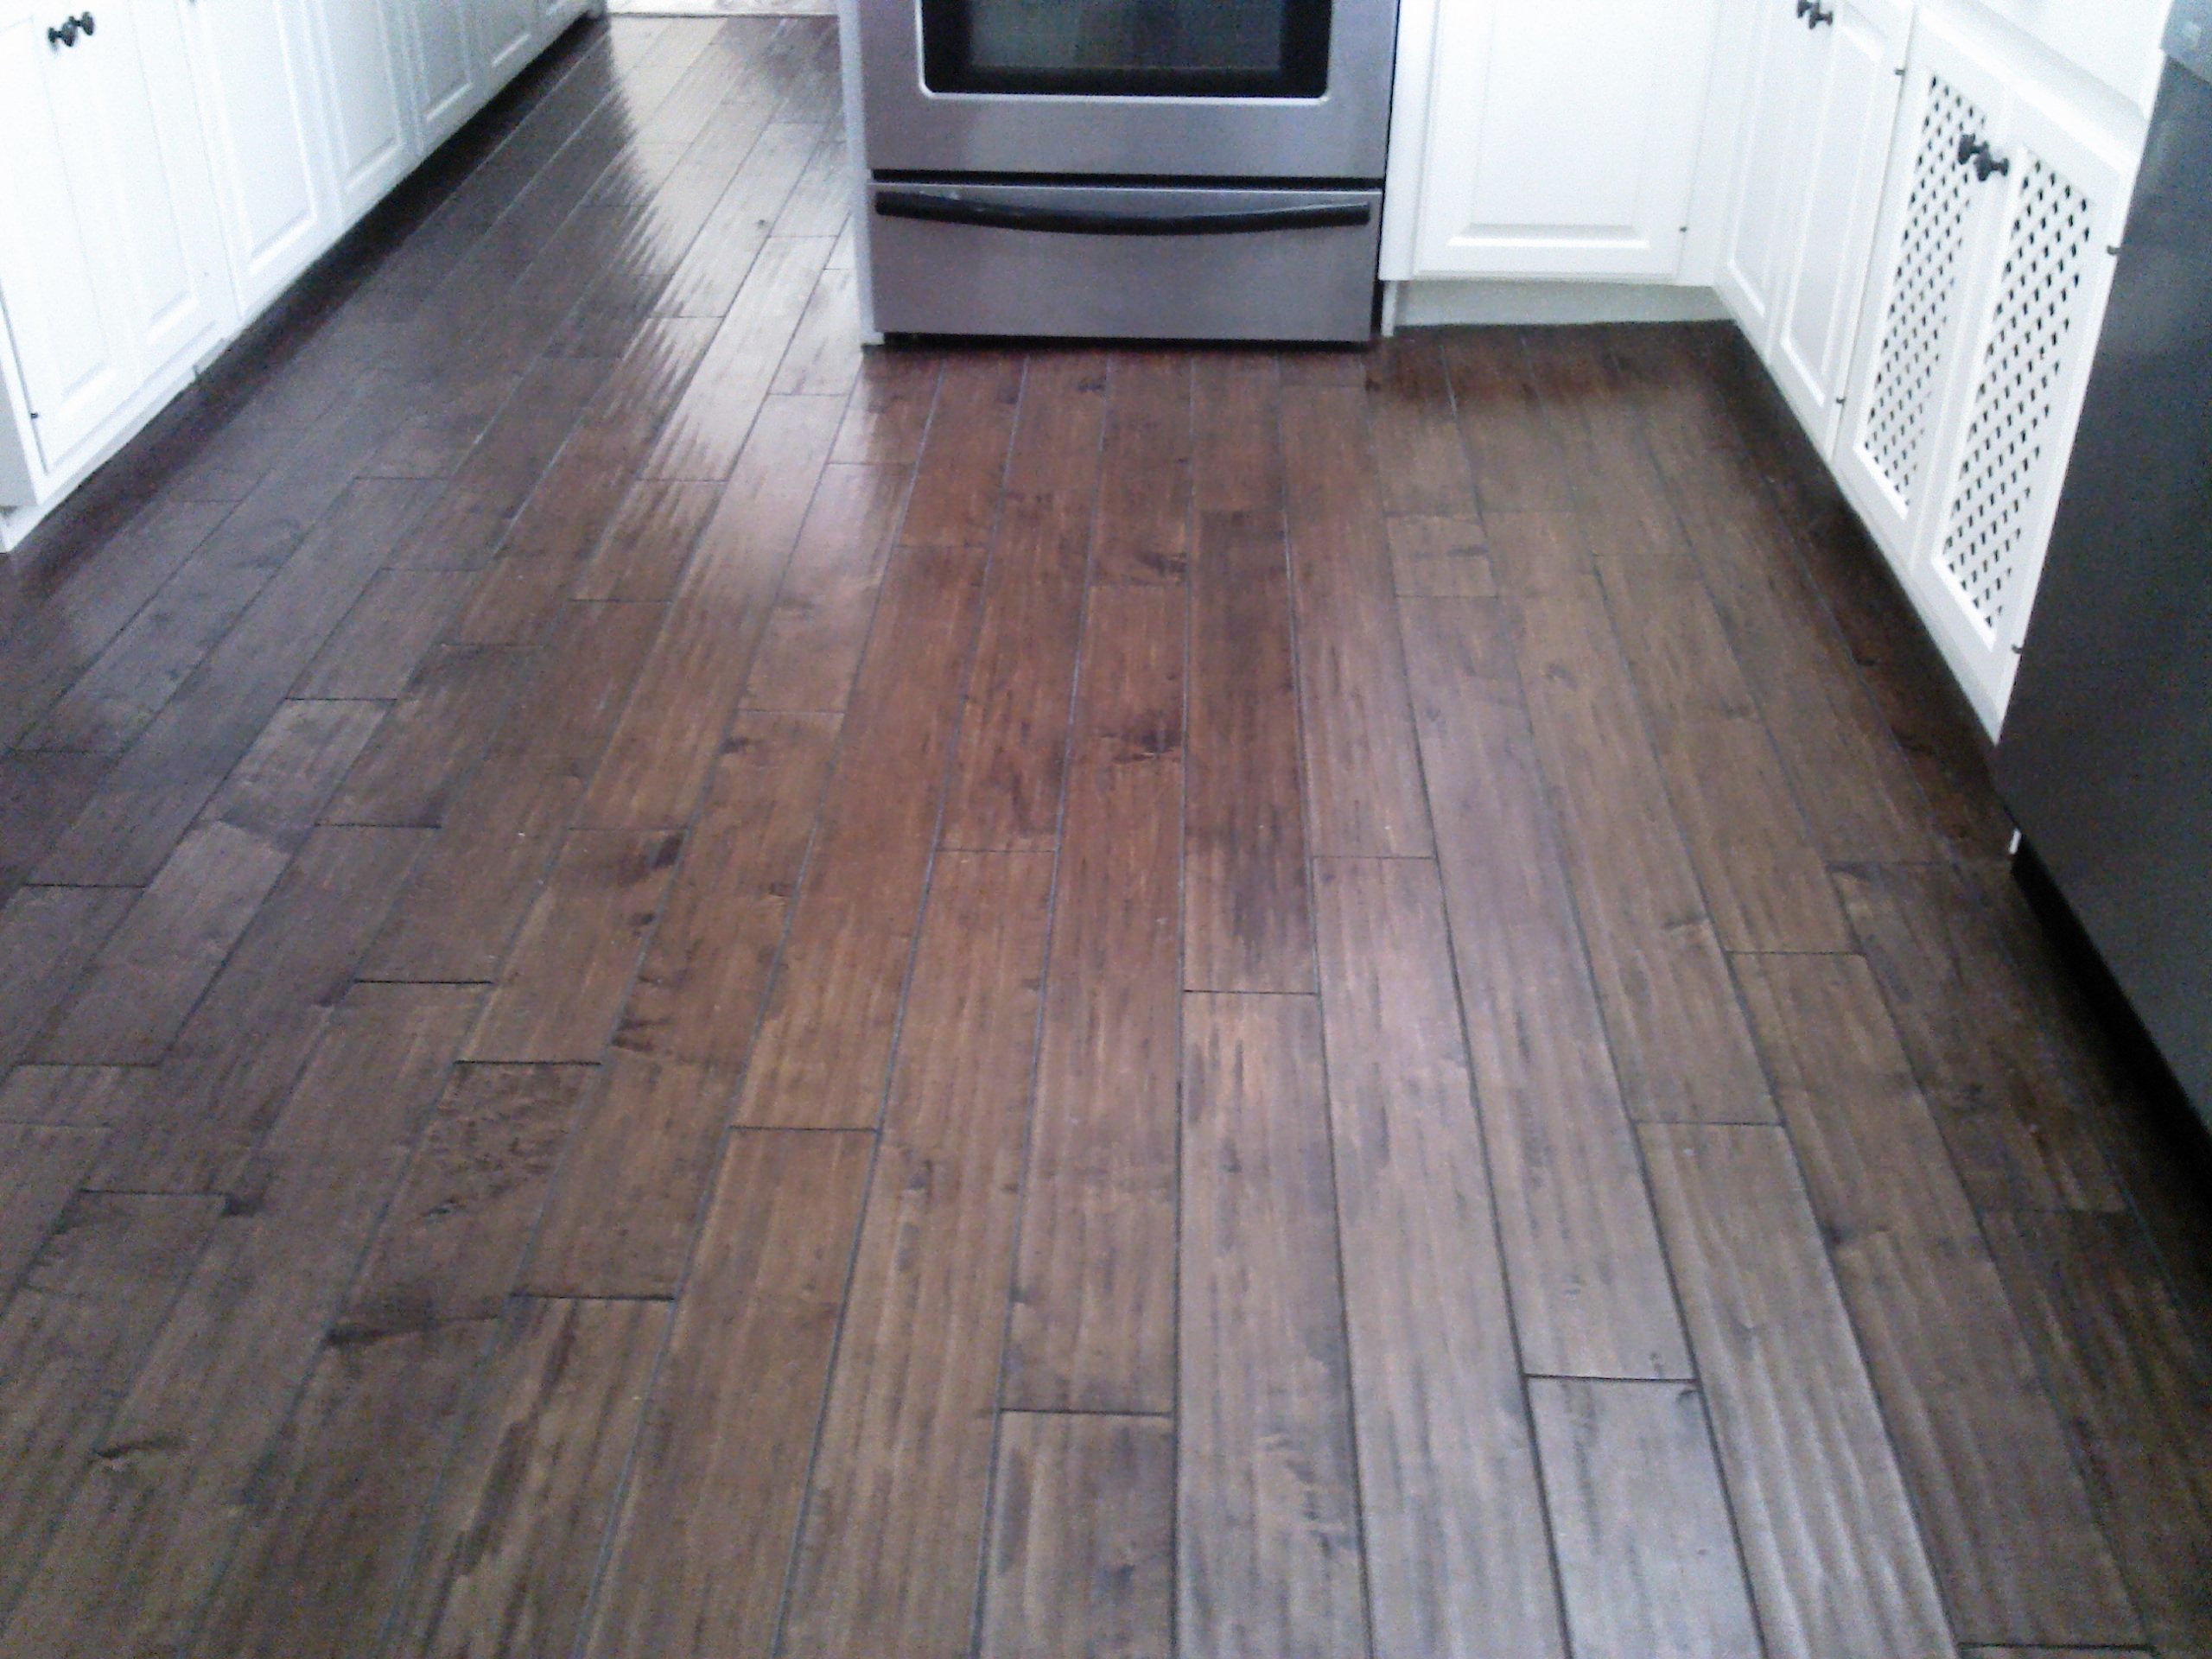 Laminate Wood Flooring In Kitchen, Hardwood Floor Vs Ceramic Tile In Kitchen